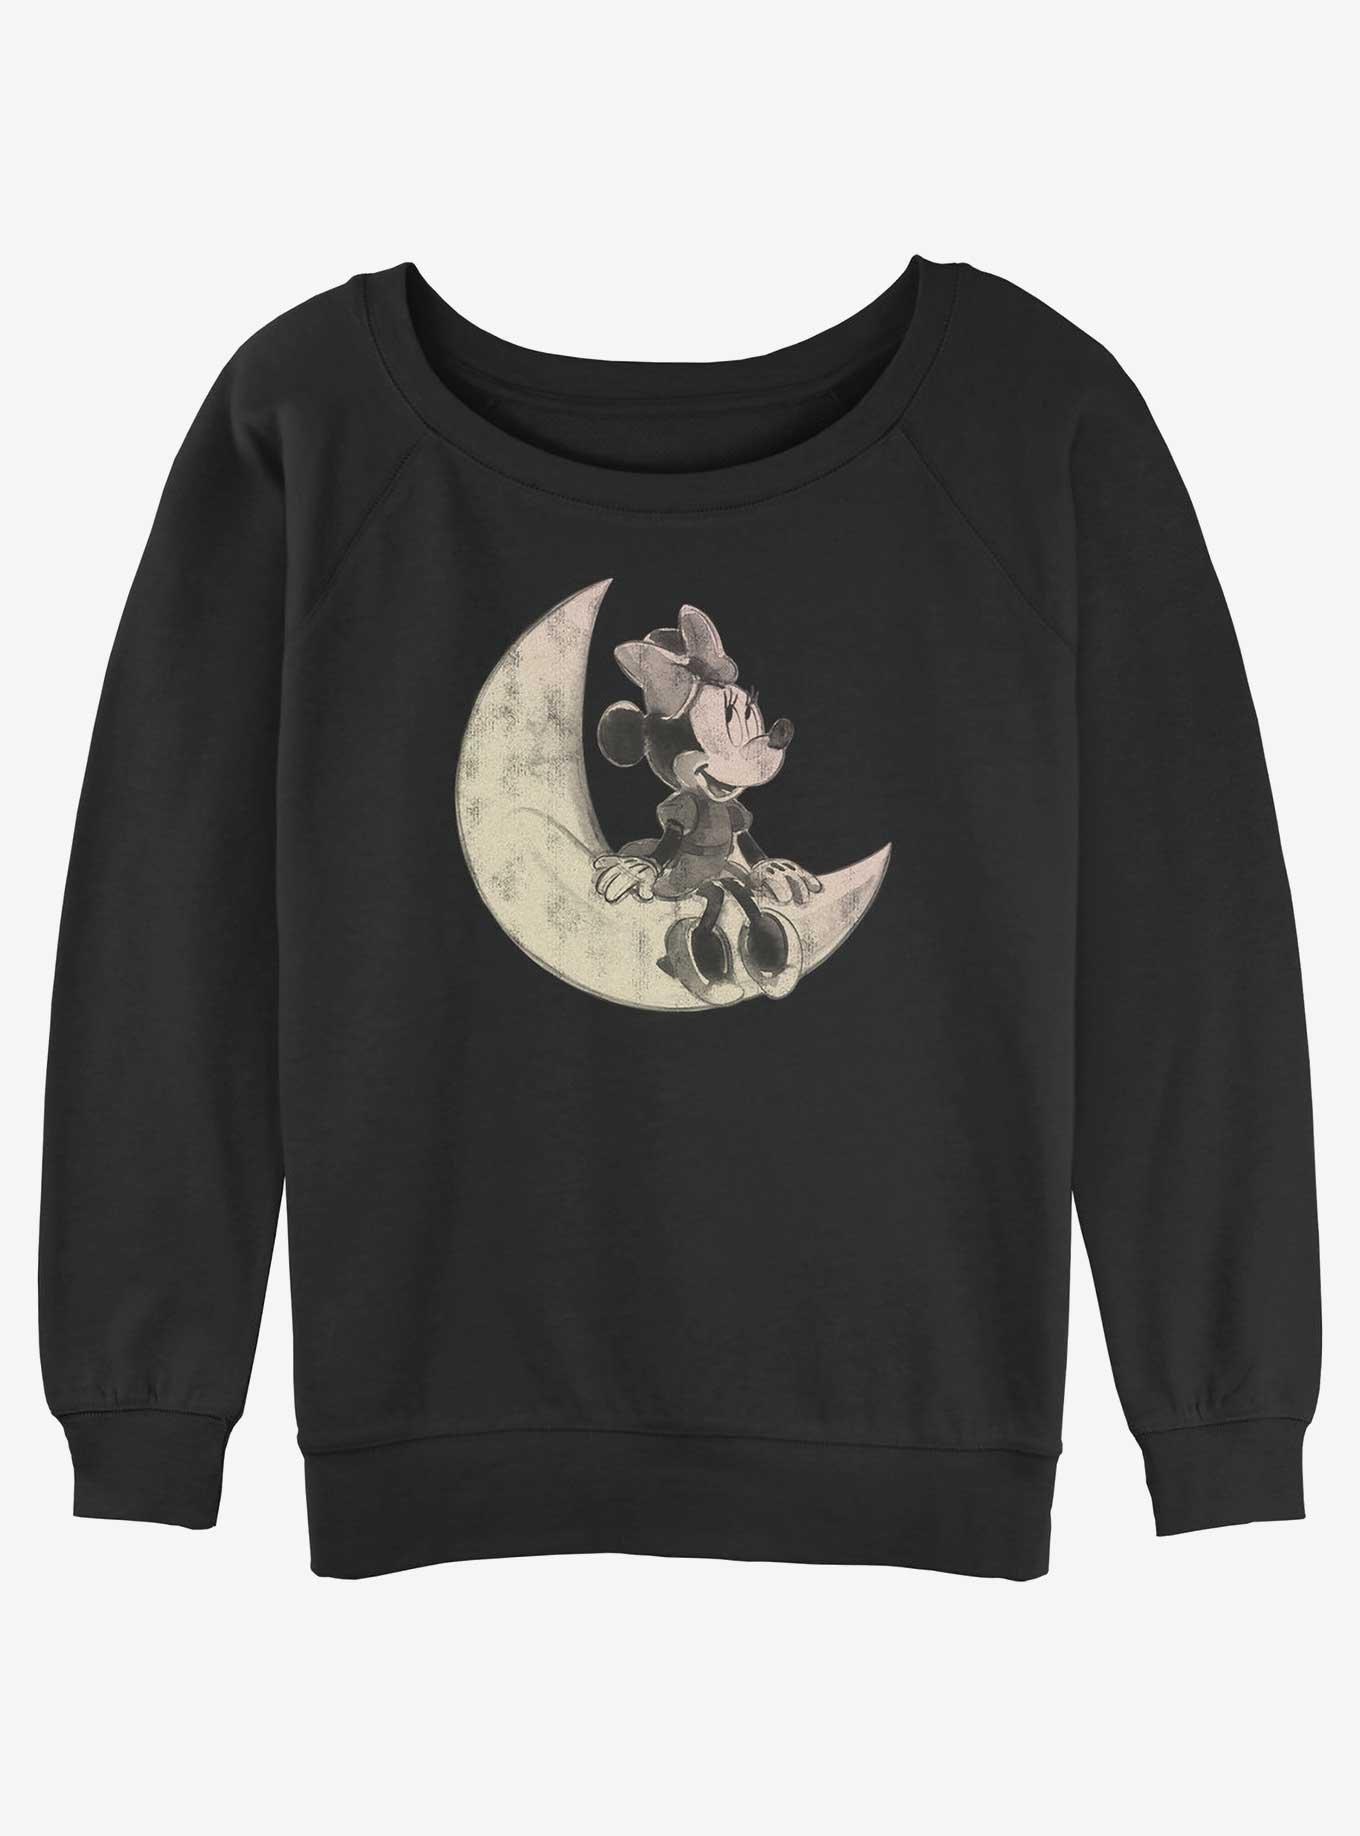 Disney Minnie Mouse On The Moon Girls Slouchy Sweatshirt, BLACK, hi-res